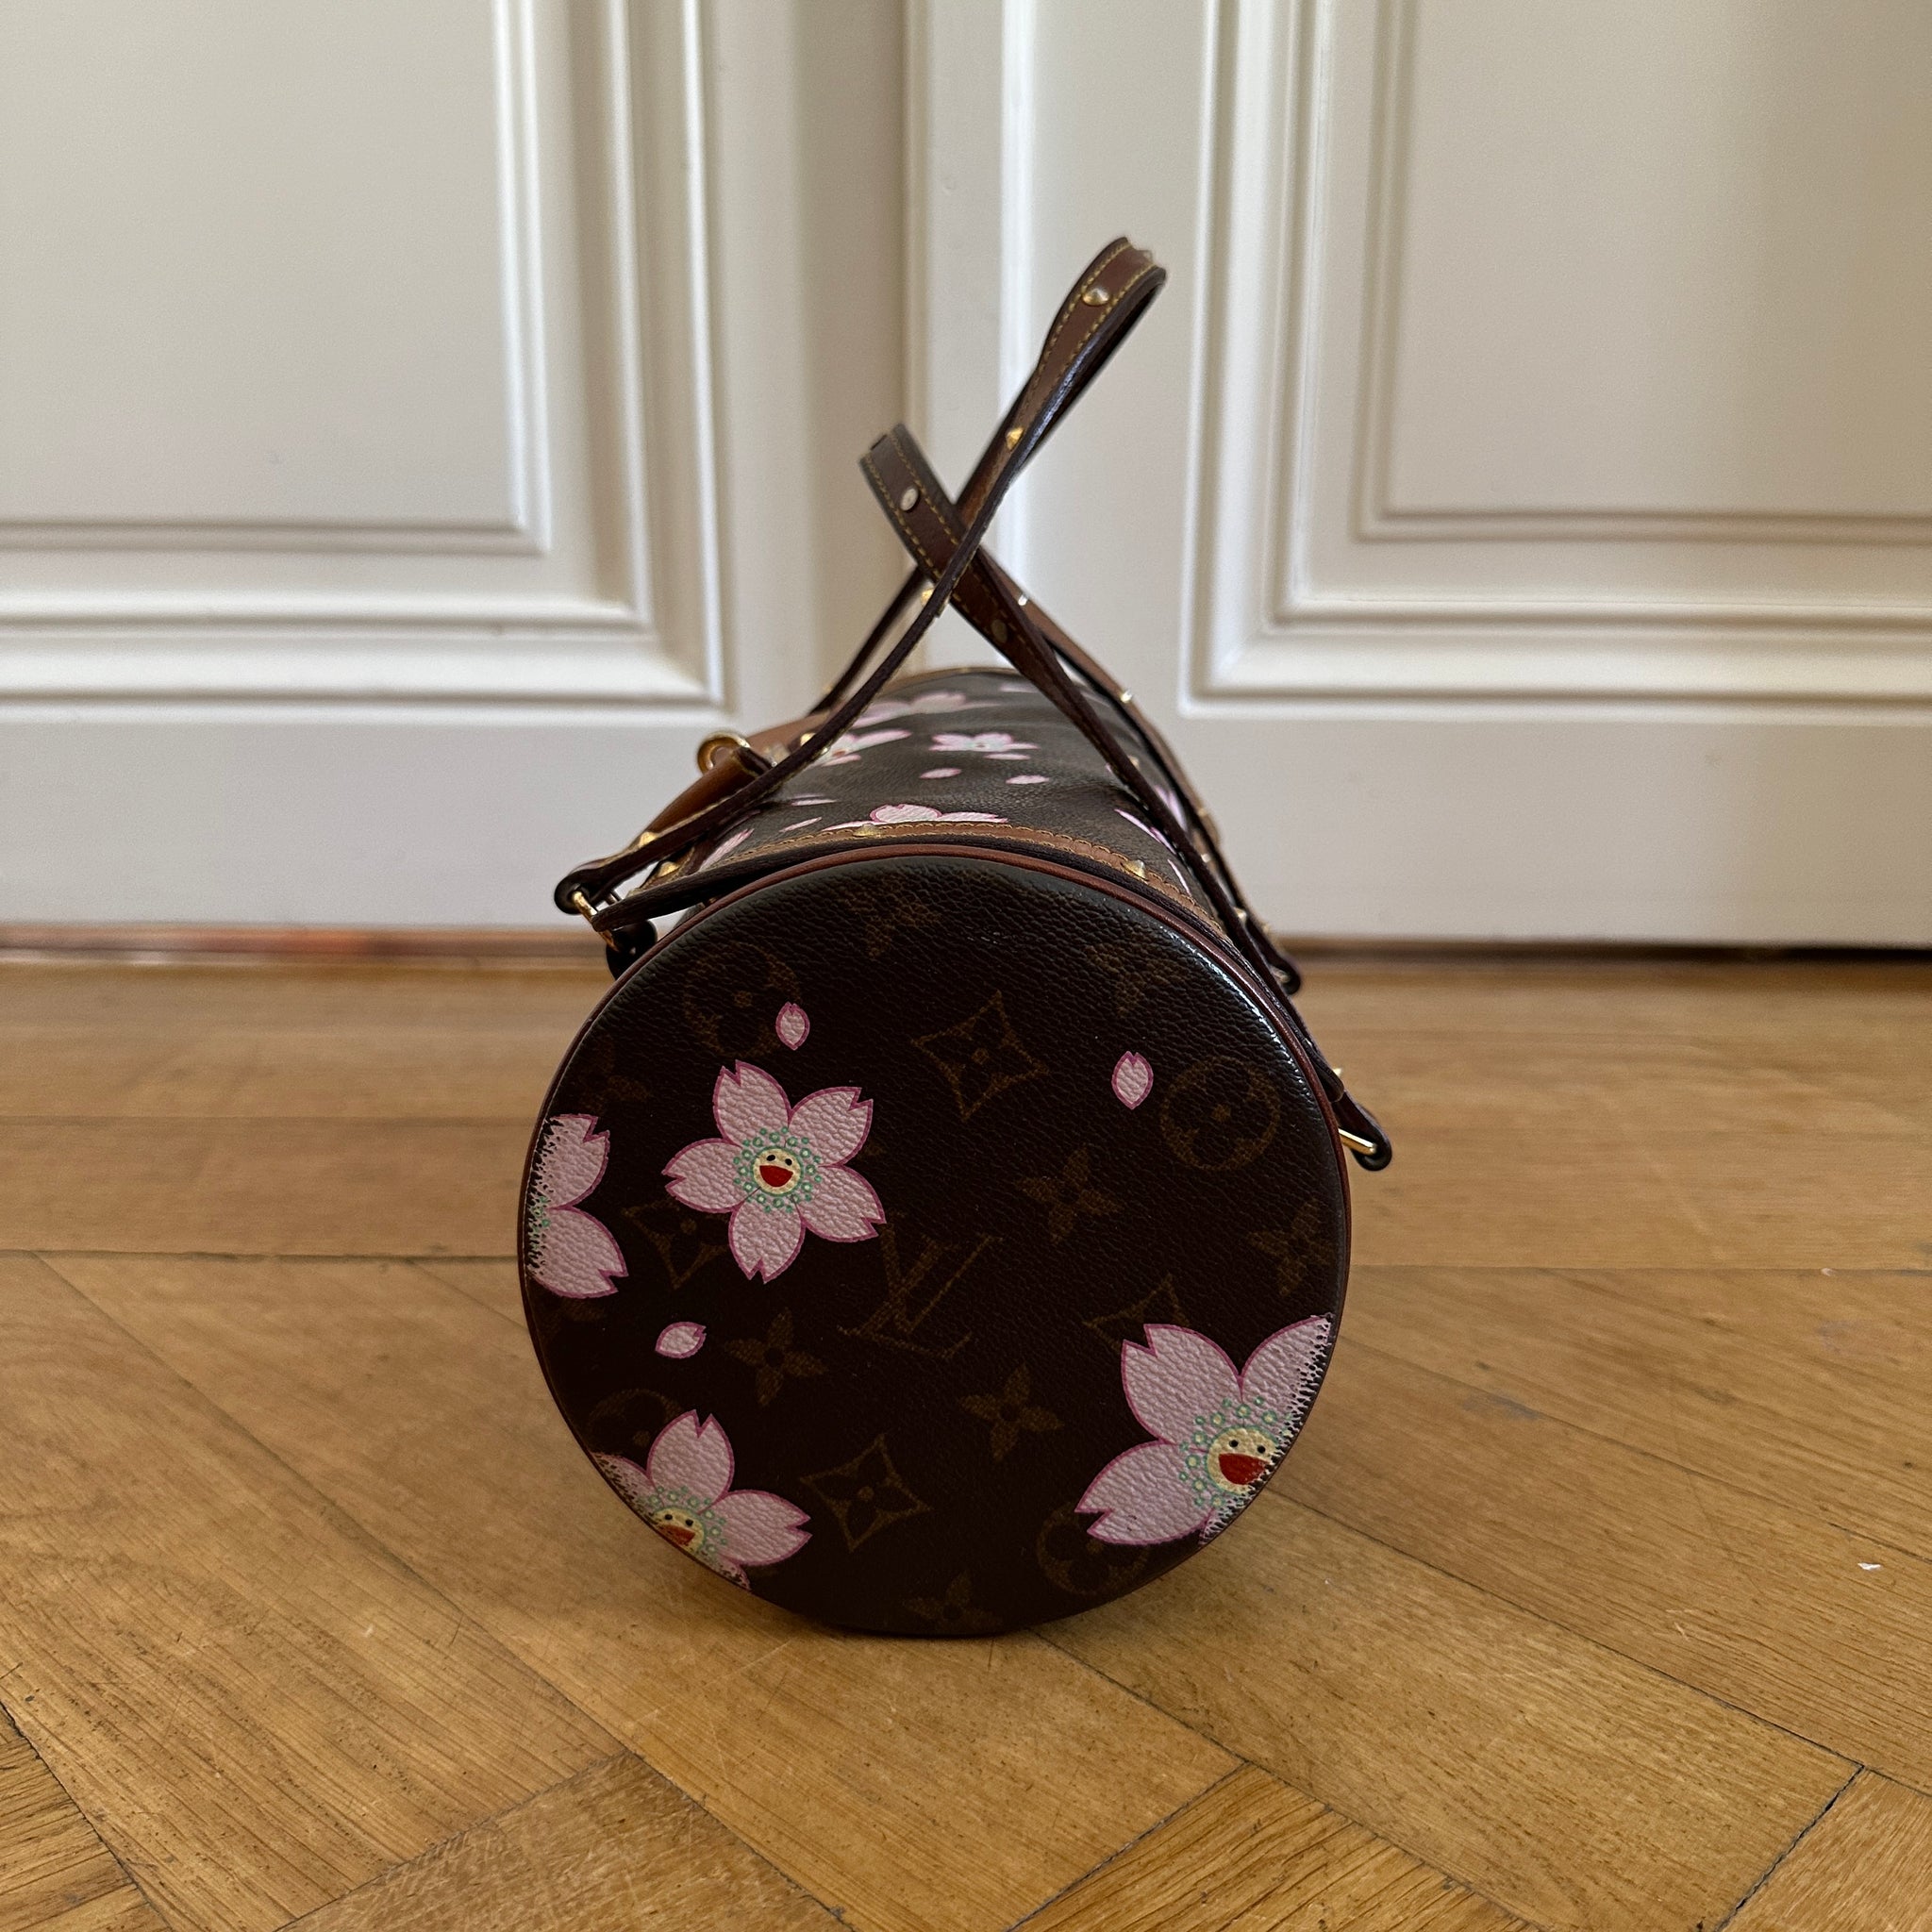 Louis Vuitton x Takashi Murakami 2003 Cherry Blossom Monogram Papillon Bag  · INTO